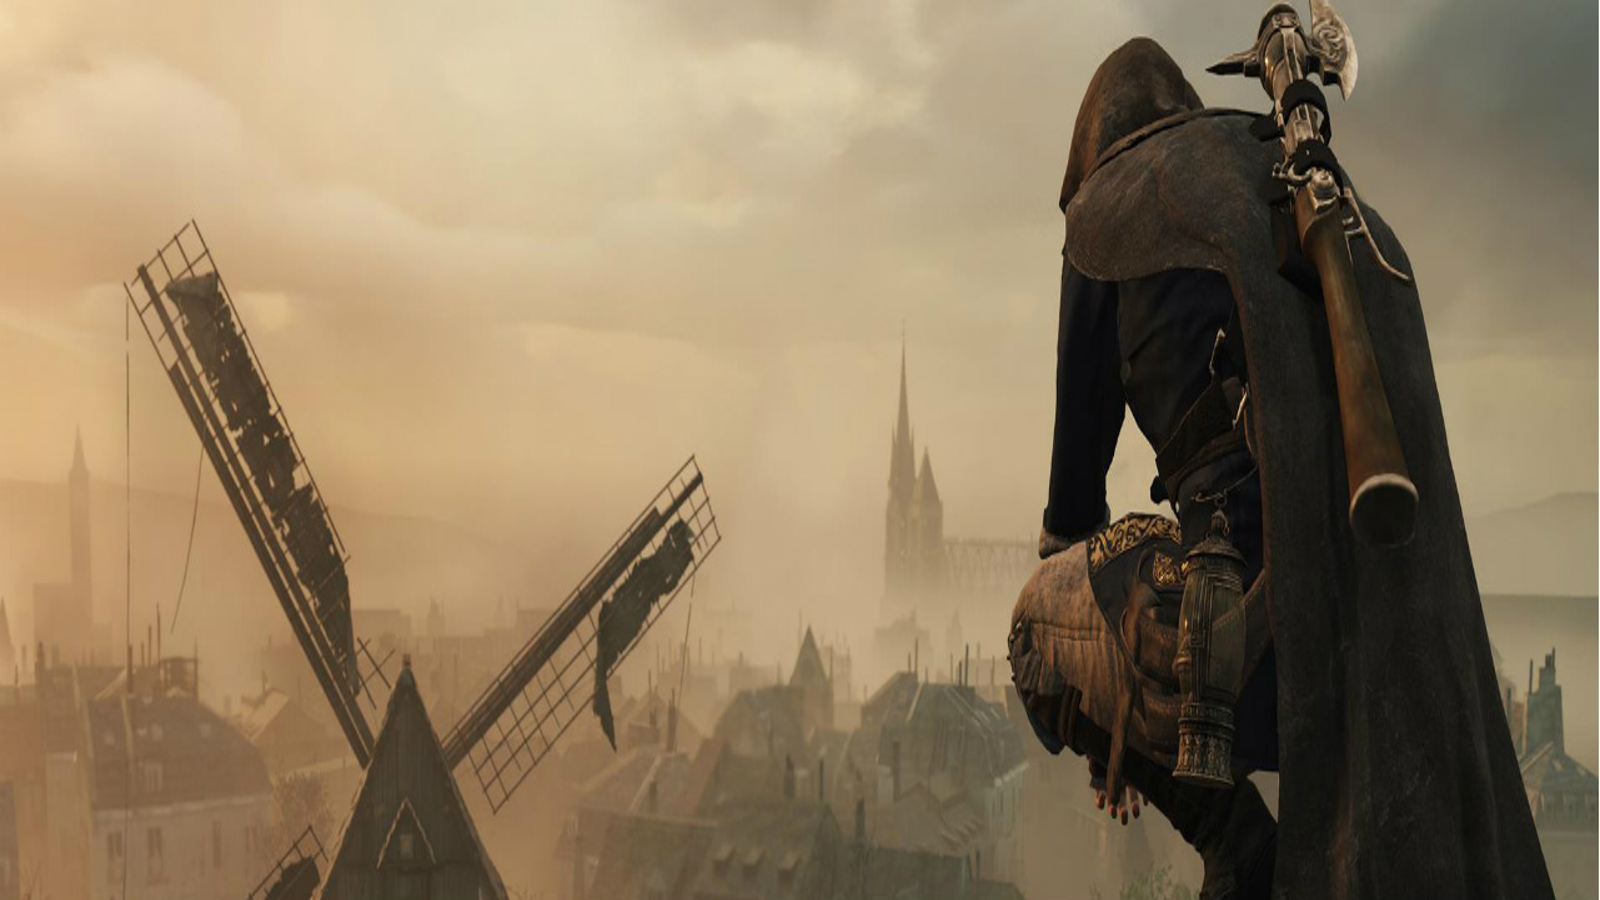 Get Assassin's Creed® Unity - Dead Kings - Microsoft Store en-IL